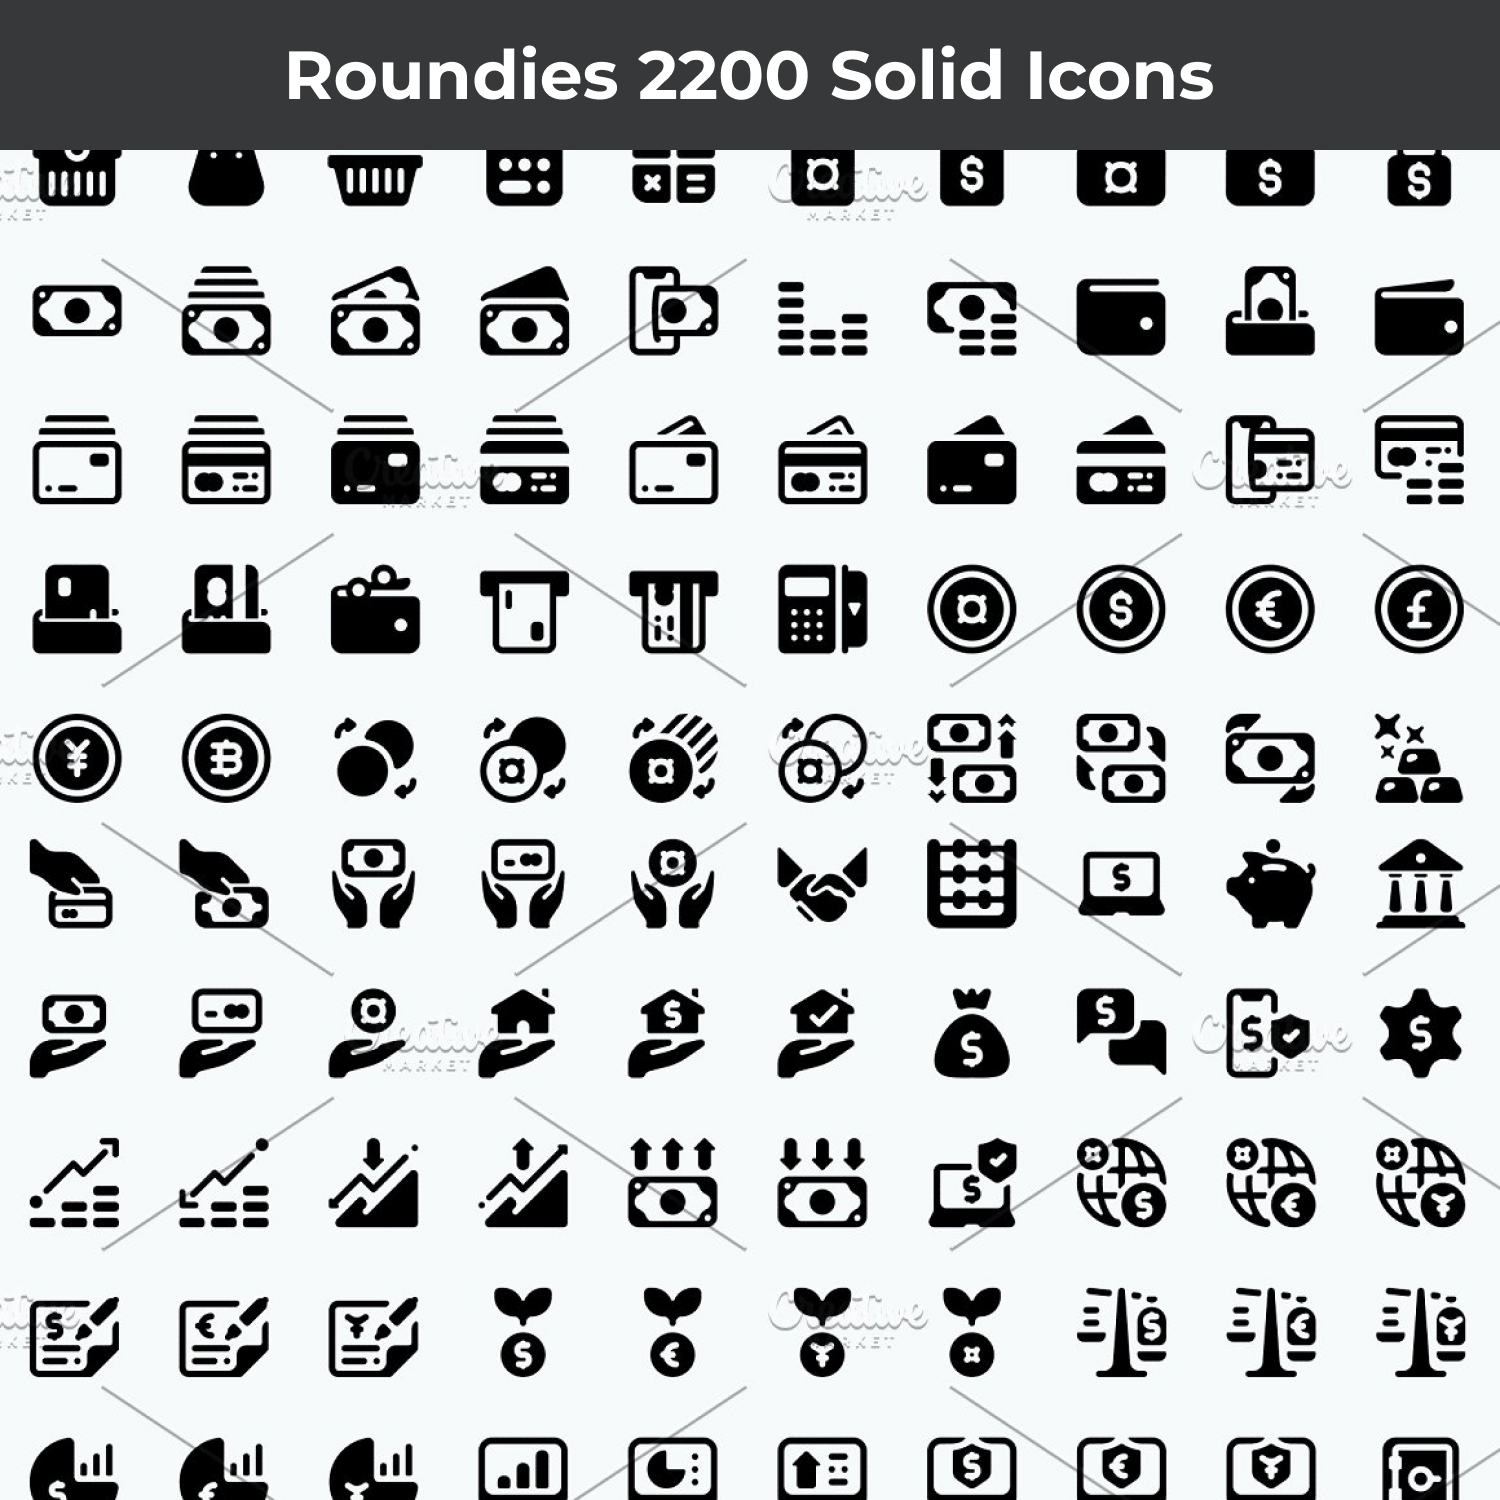 Big square theme, white background, black roundies icons